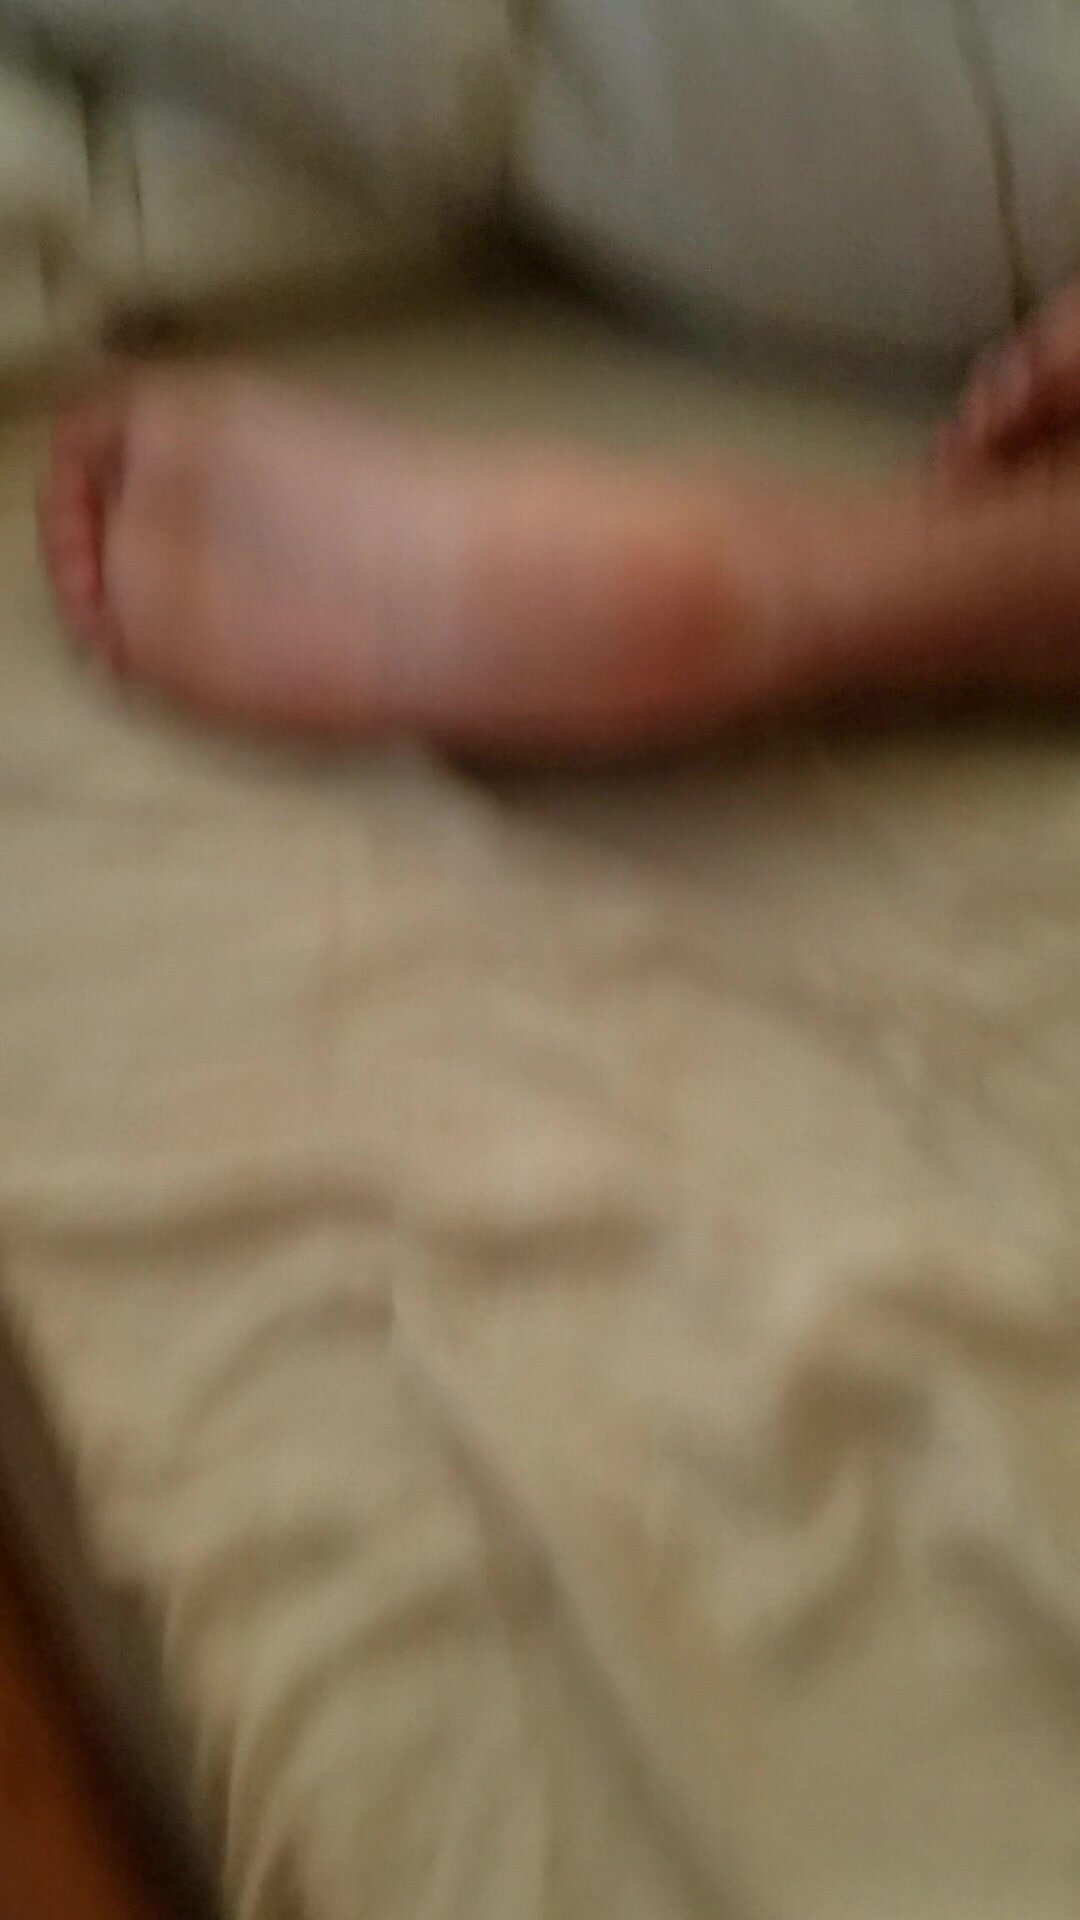 My cousins sleeping feet